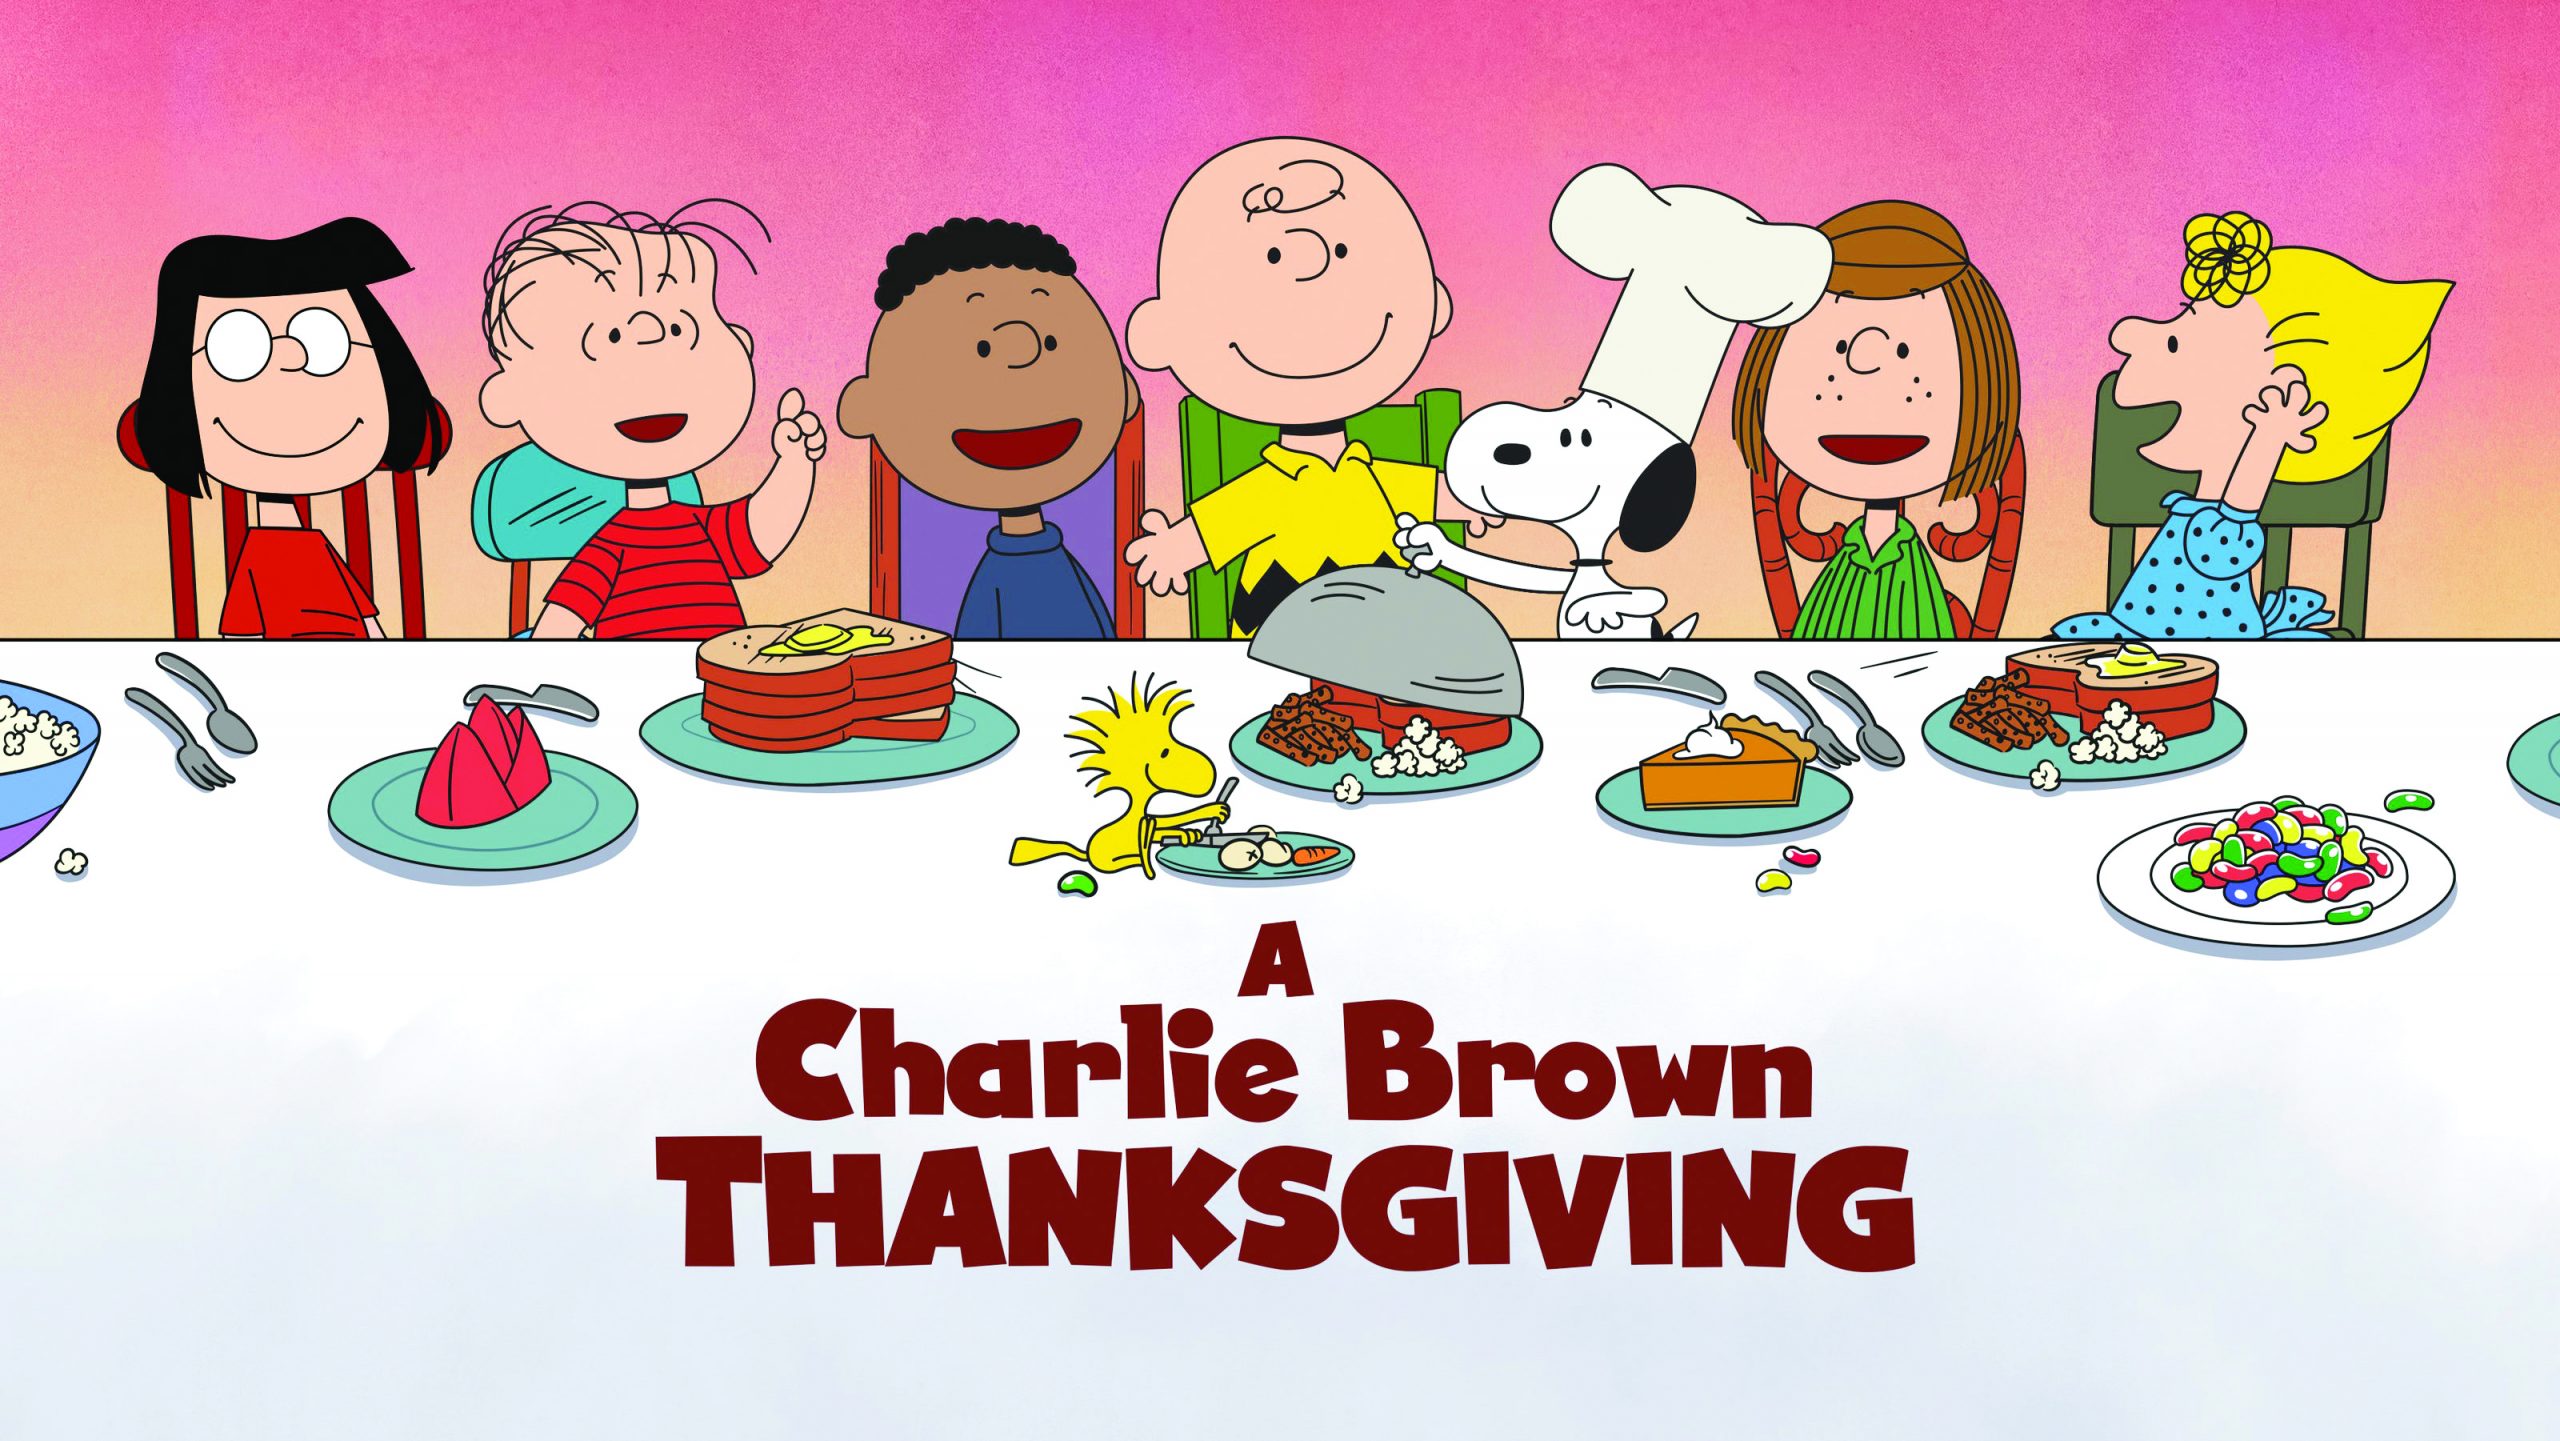 ‘A Charlie Brown Thanksgiving’ gives nostalgic vibe to the November season